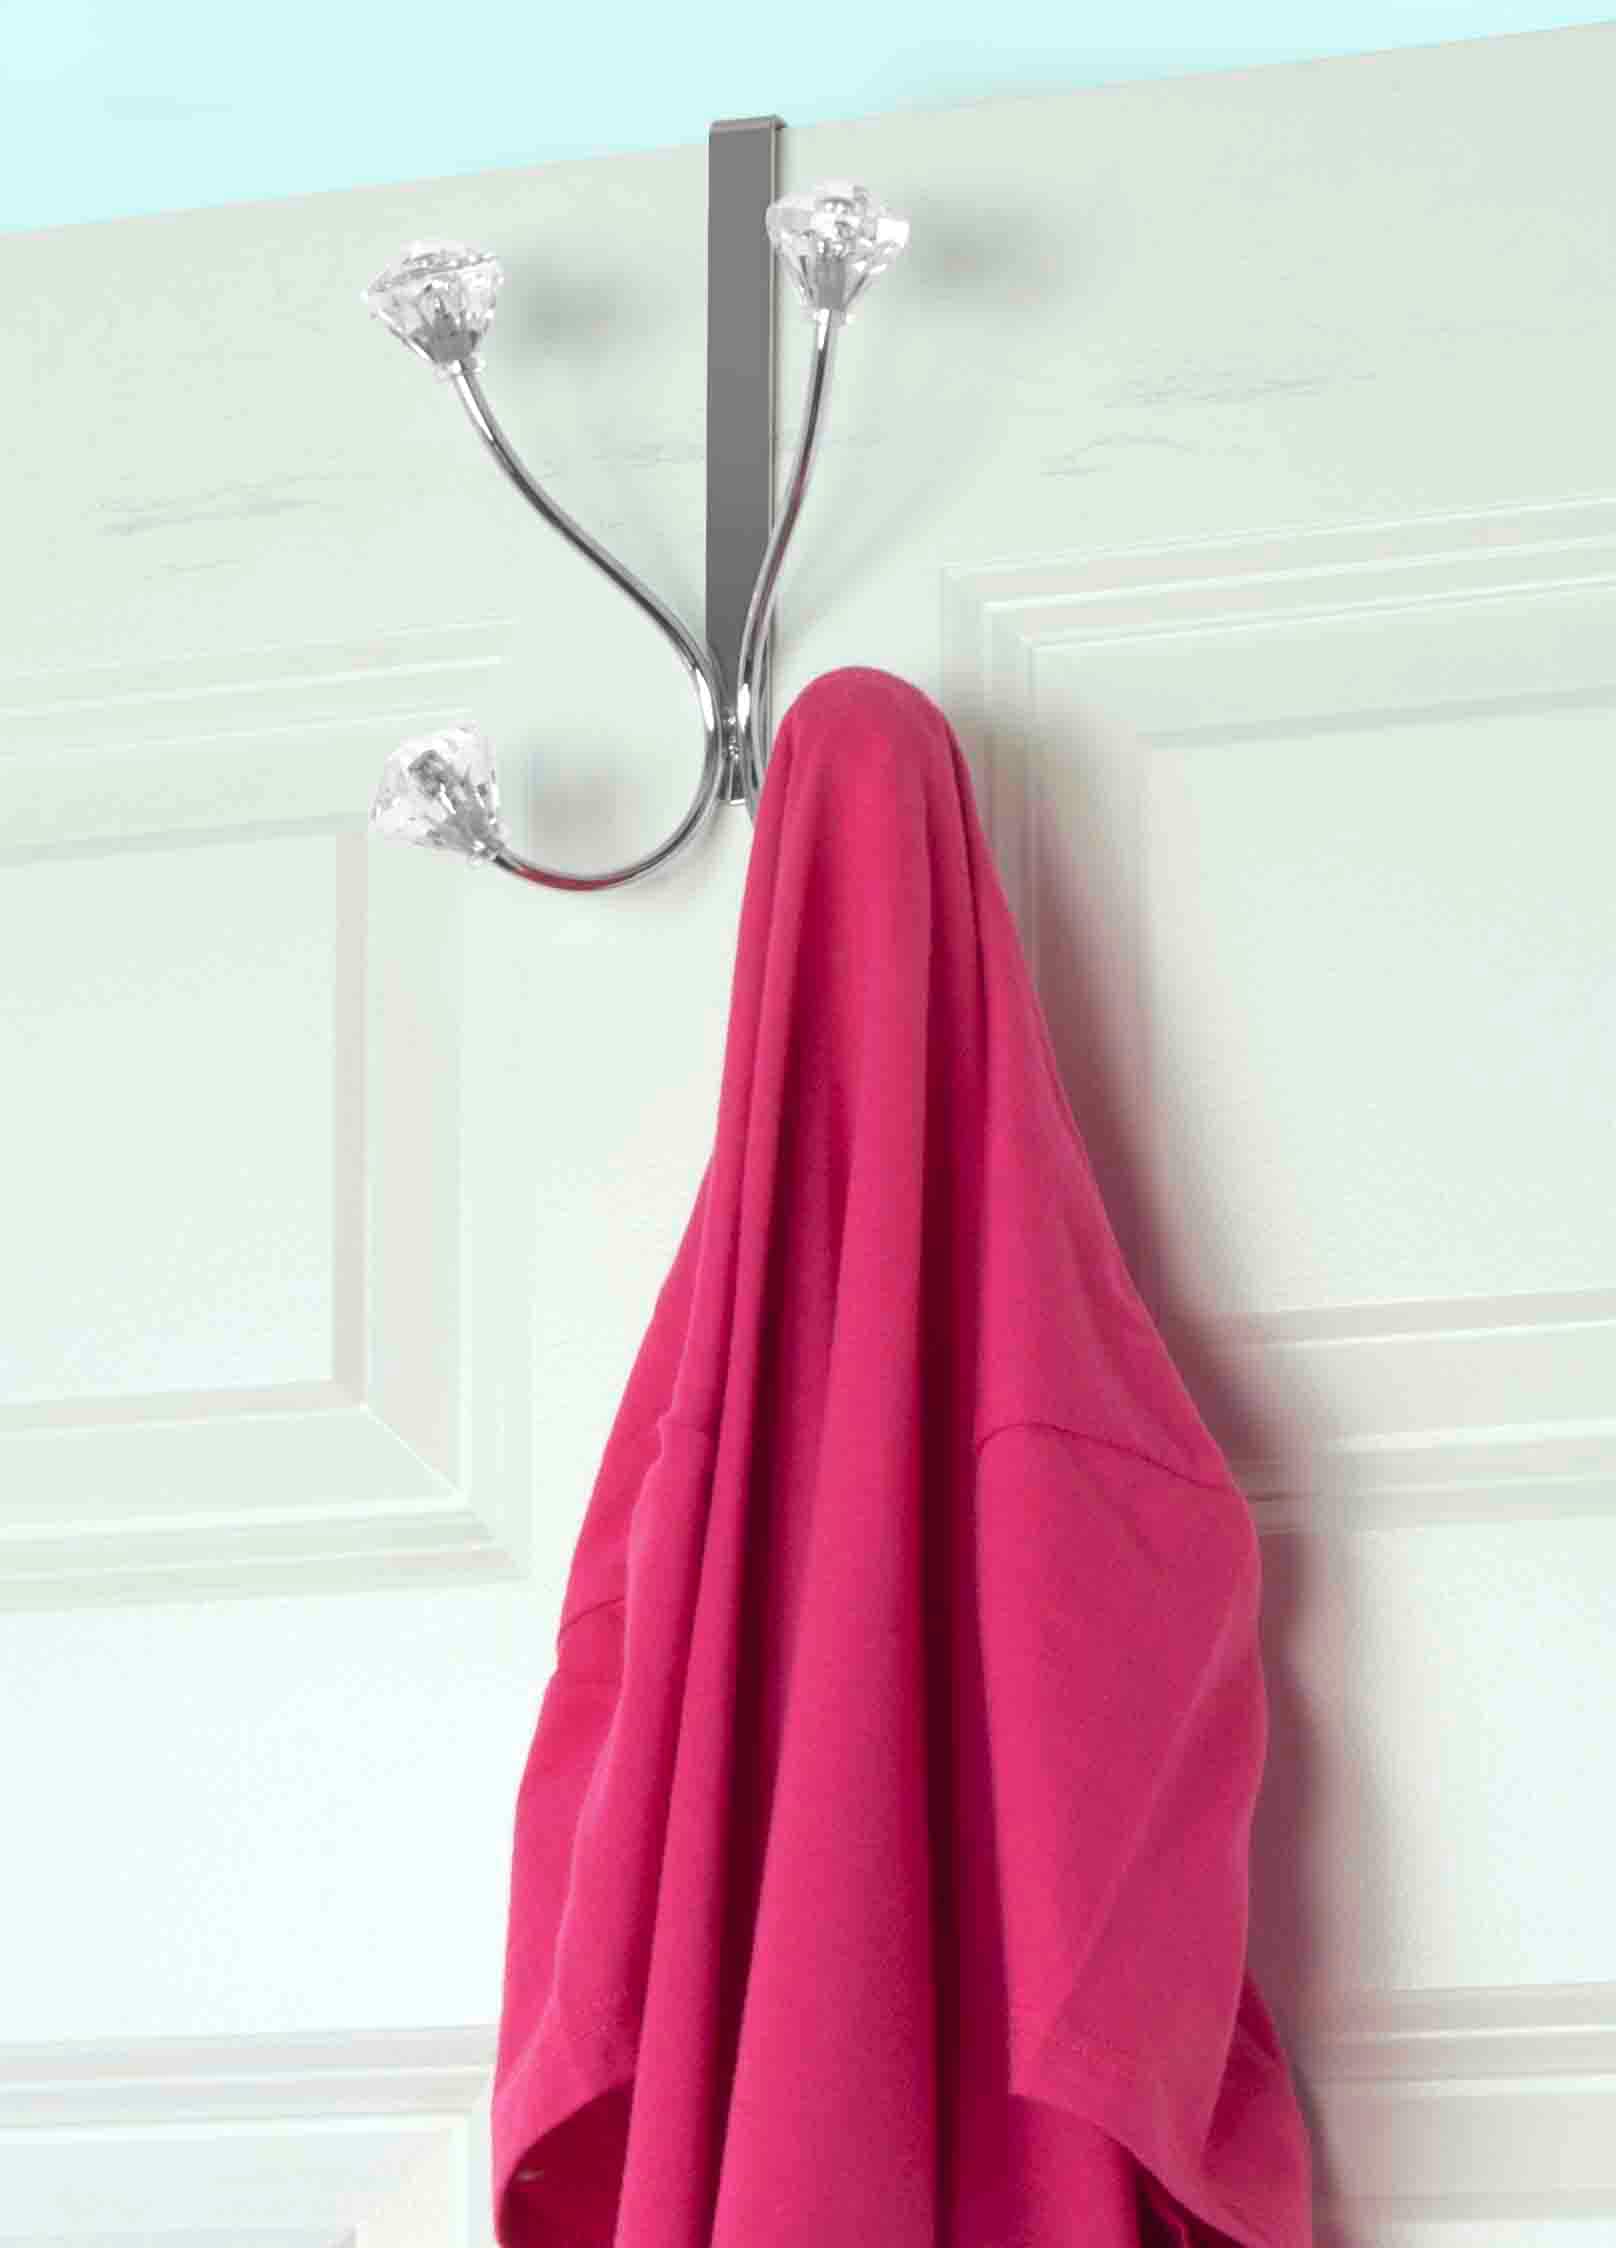 Over The Door Double Hook Essentials Chrome Plated Coat Clothes Towel Hanger New 